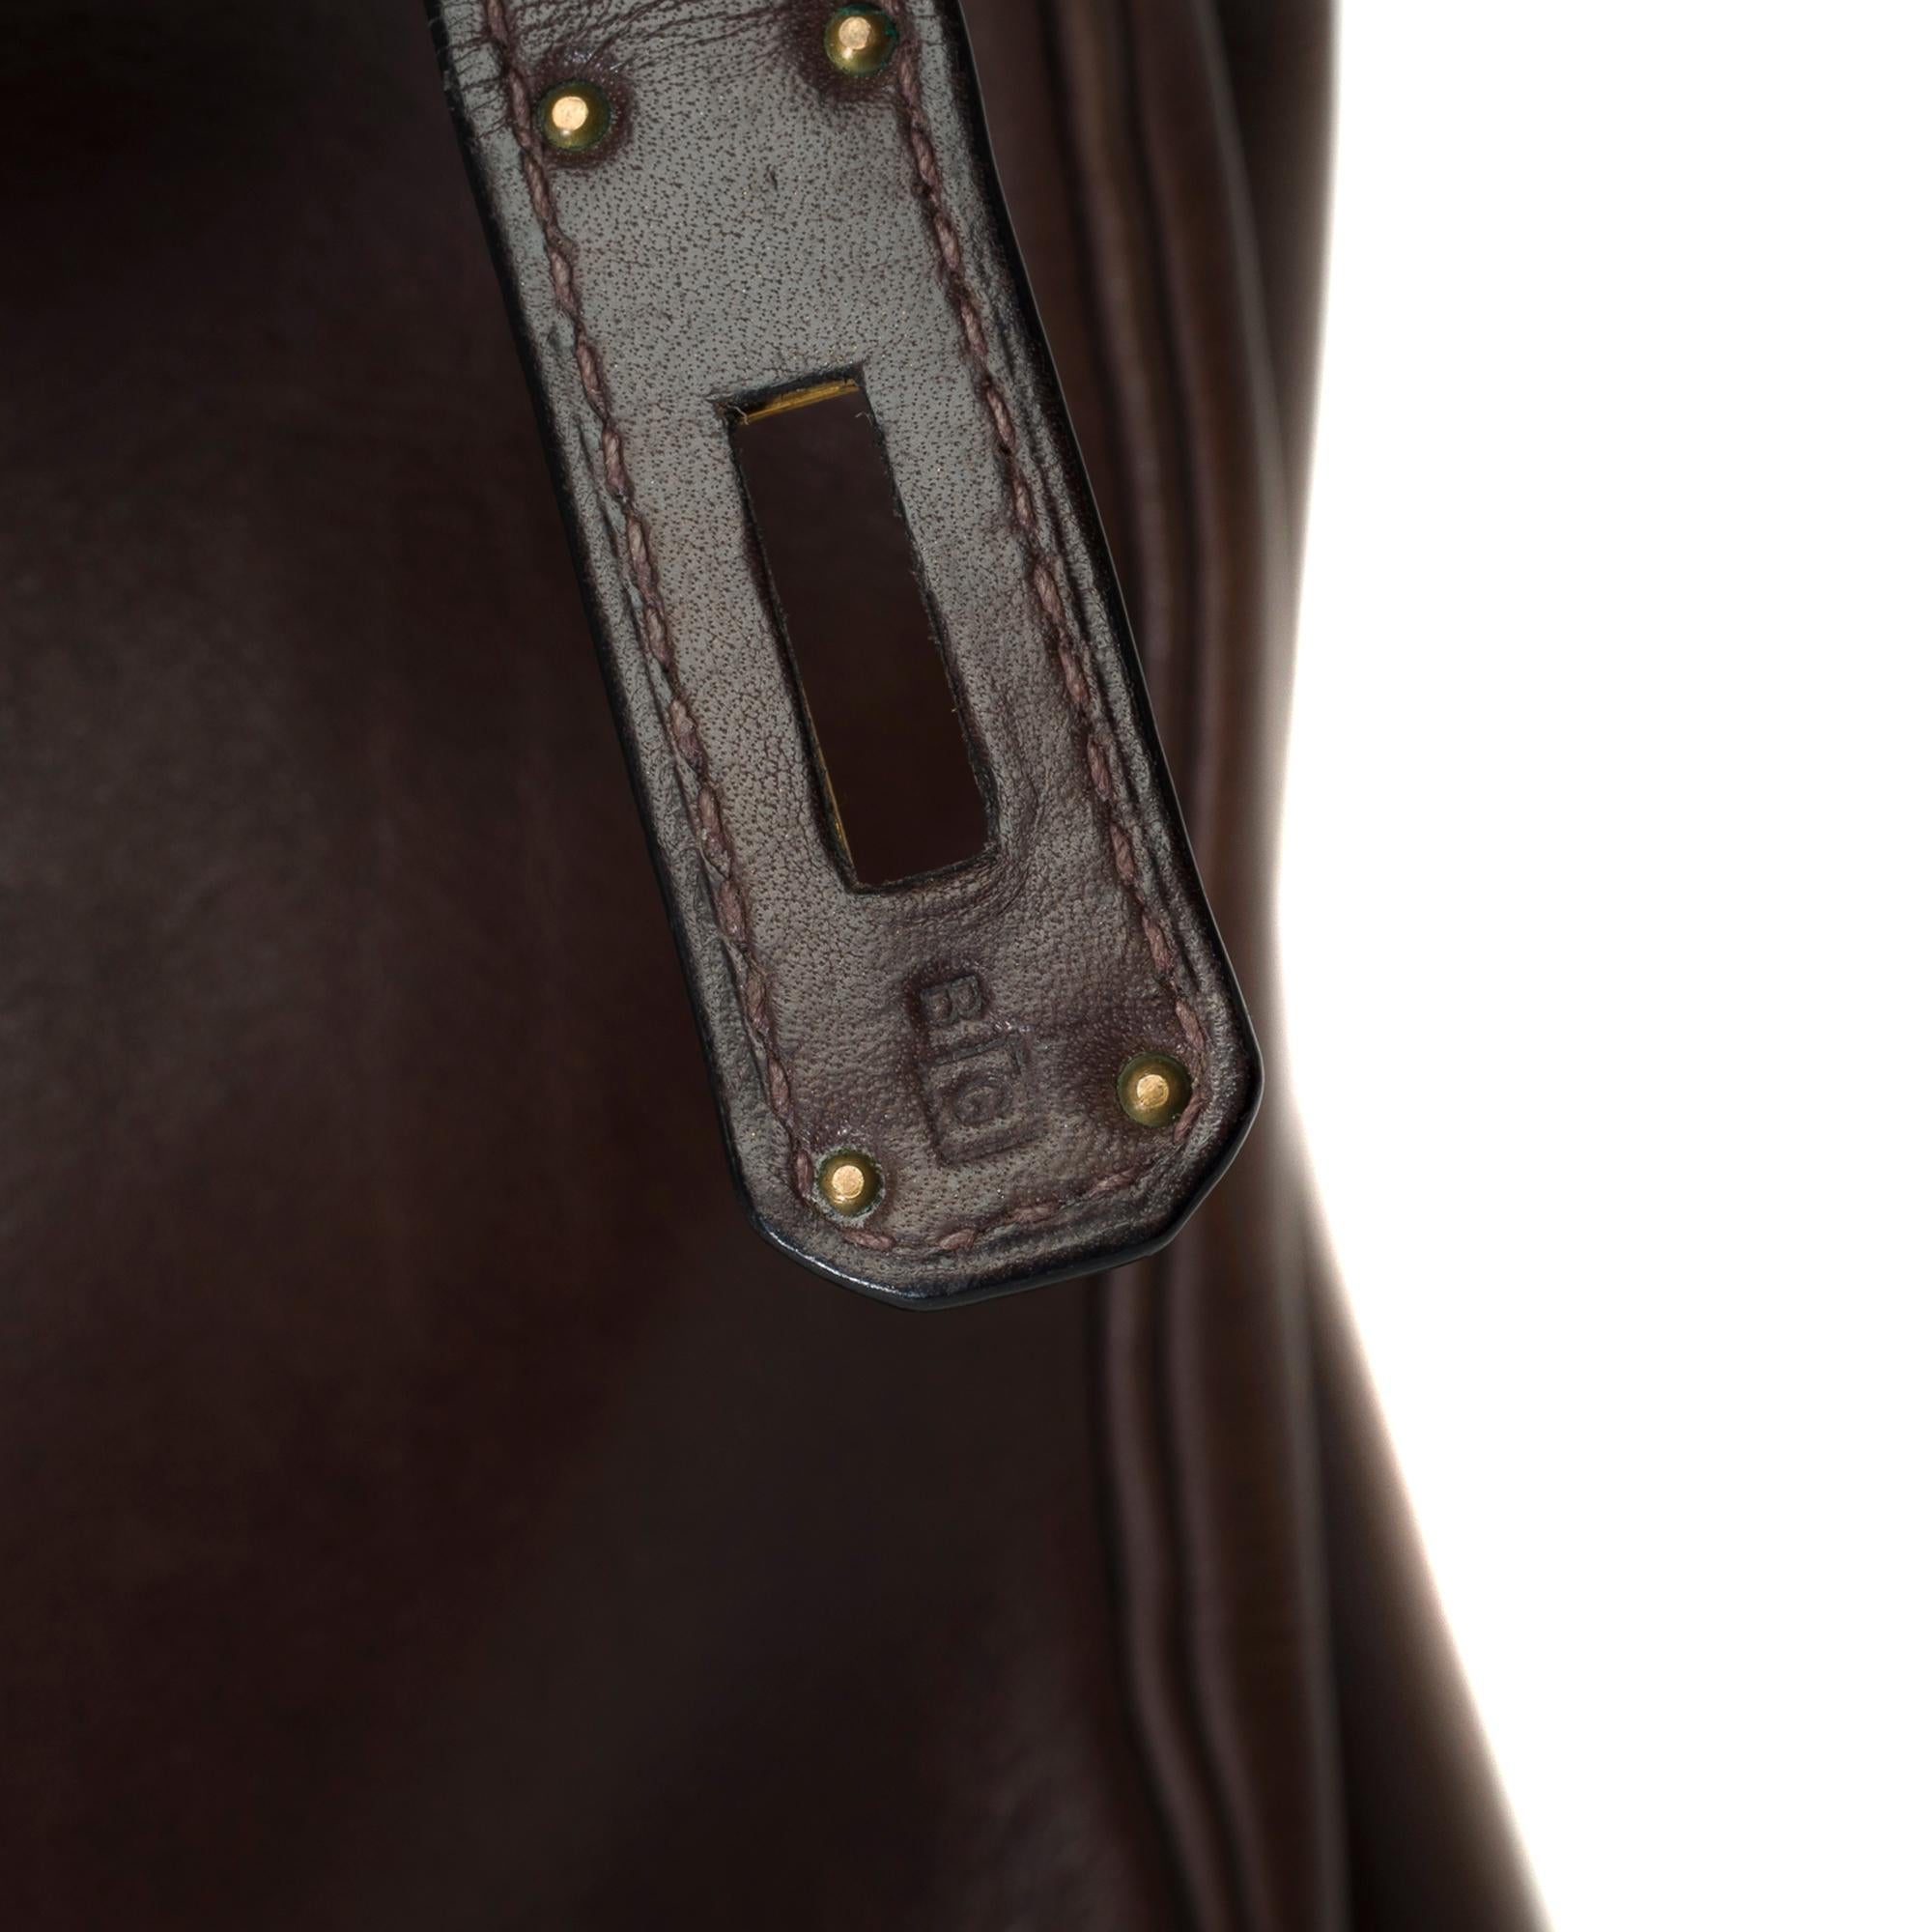 Rare & Exceptional Hermès Birkin 35 handbag in Ebony Brown Barenia leather, GHW For Sale 3